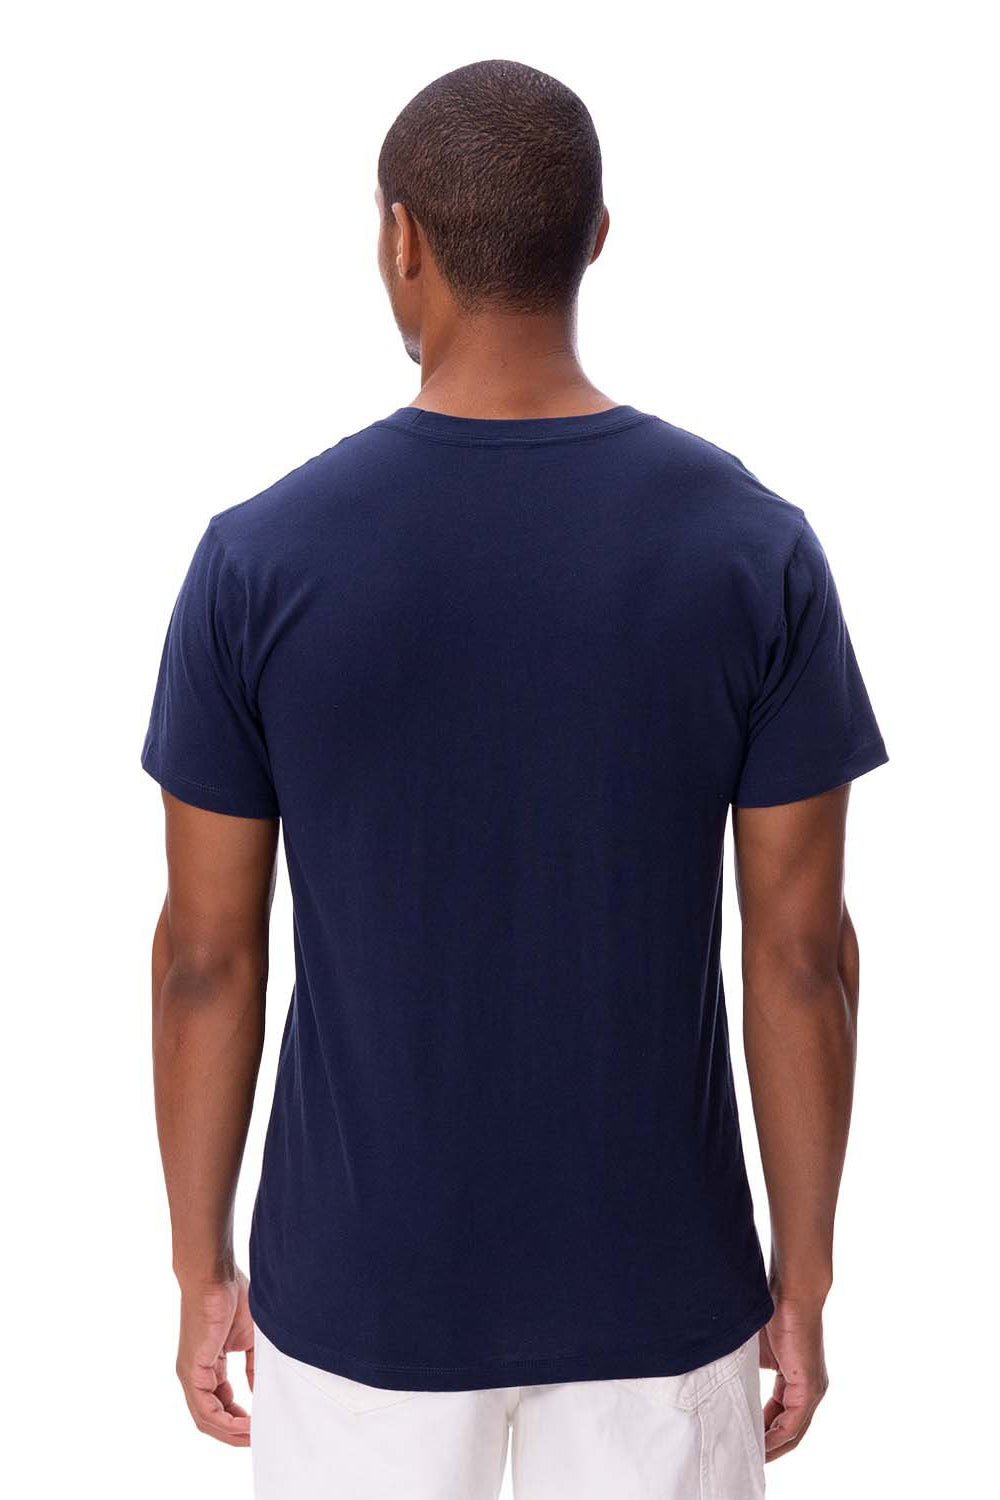 Threadfast Apparel 180A Mens Ultimate Short Sleeve Crewneck T-Shirt Midnight Navy Blue Back